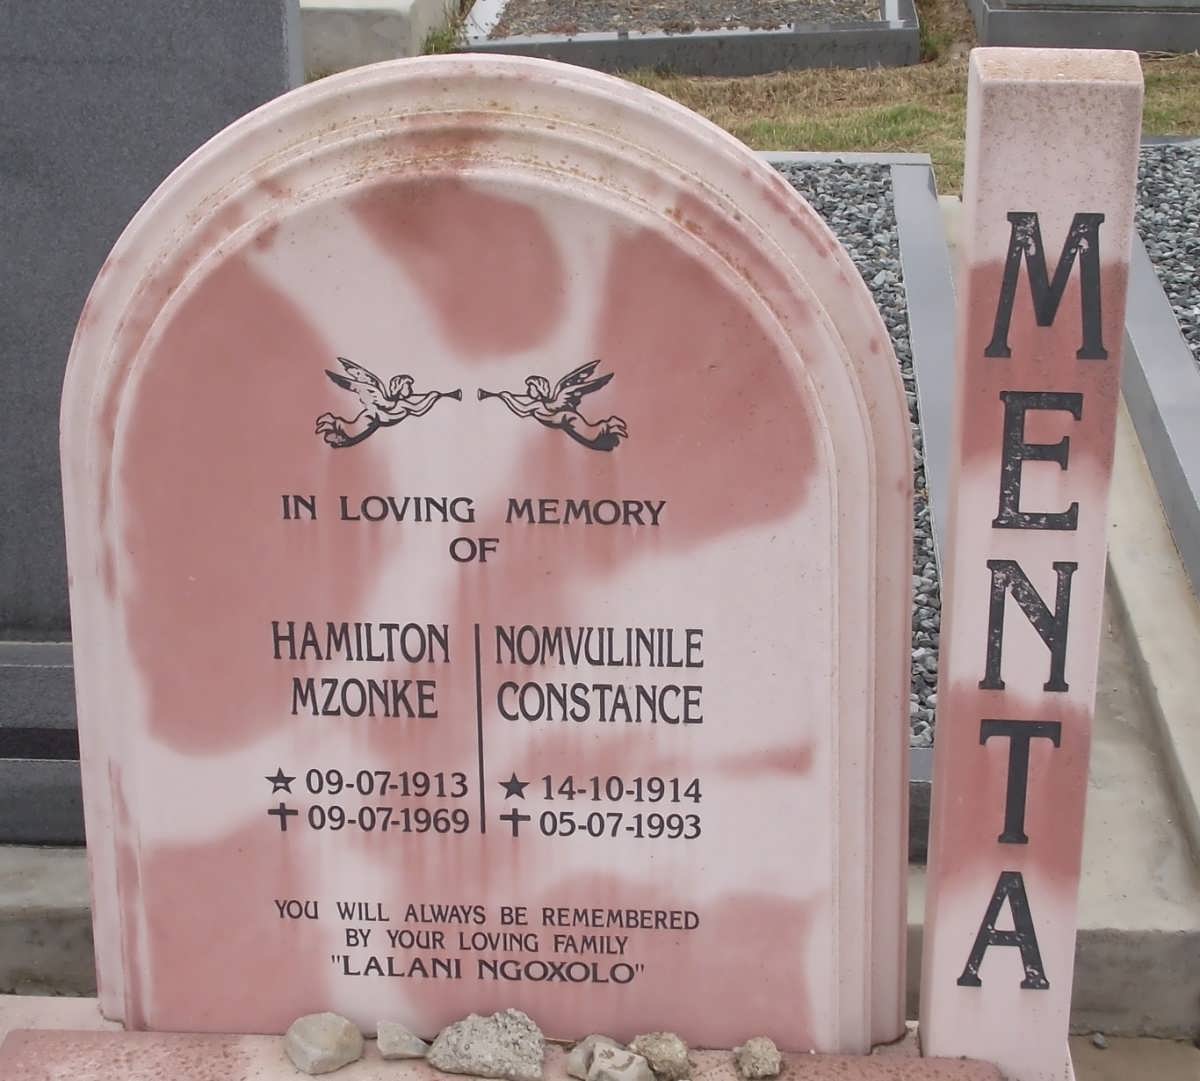 MENTA Hamilton Mzonke 1913-1969 & Nomvulinile Constance 1914-1993